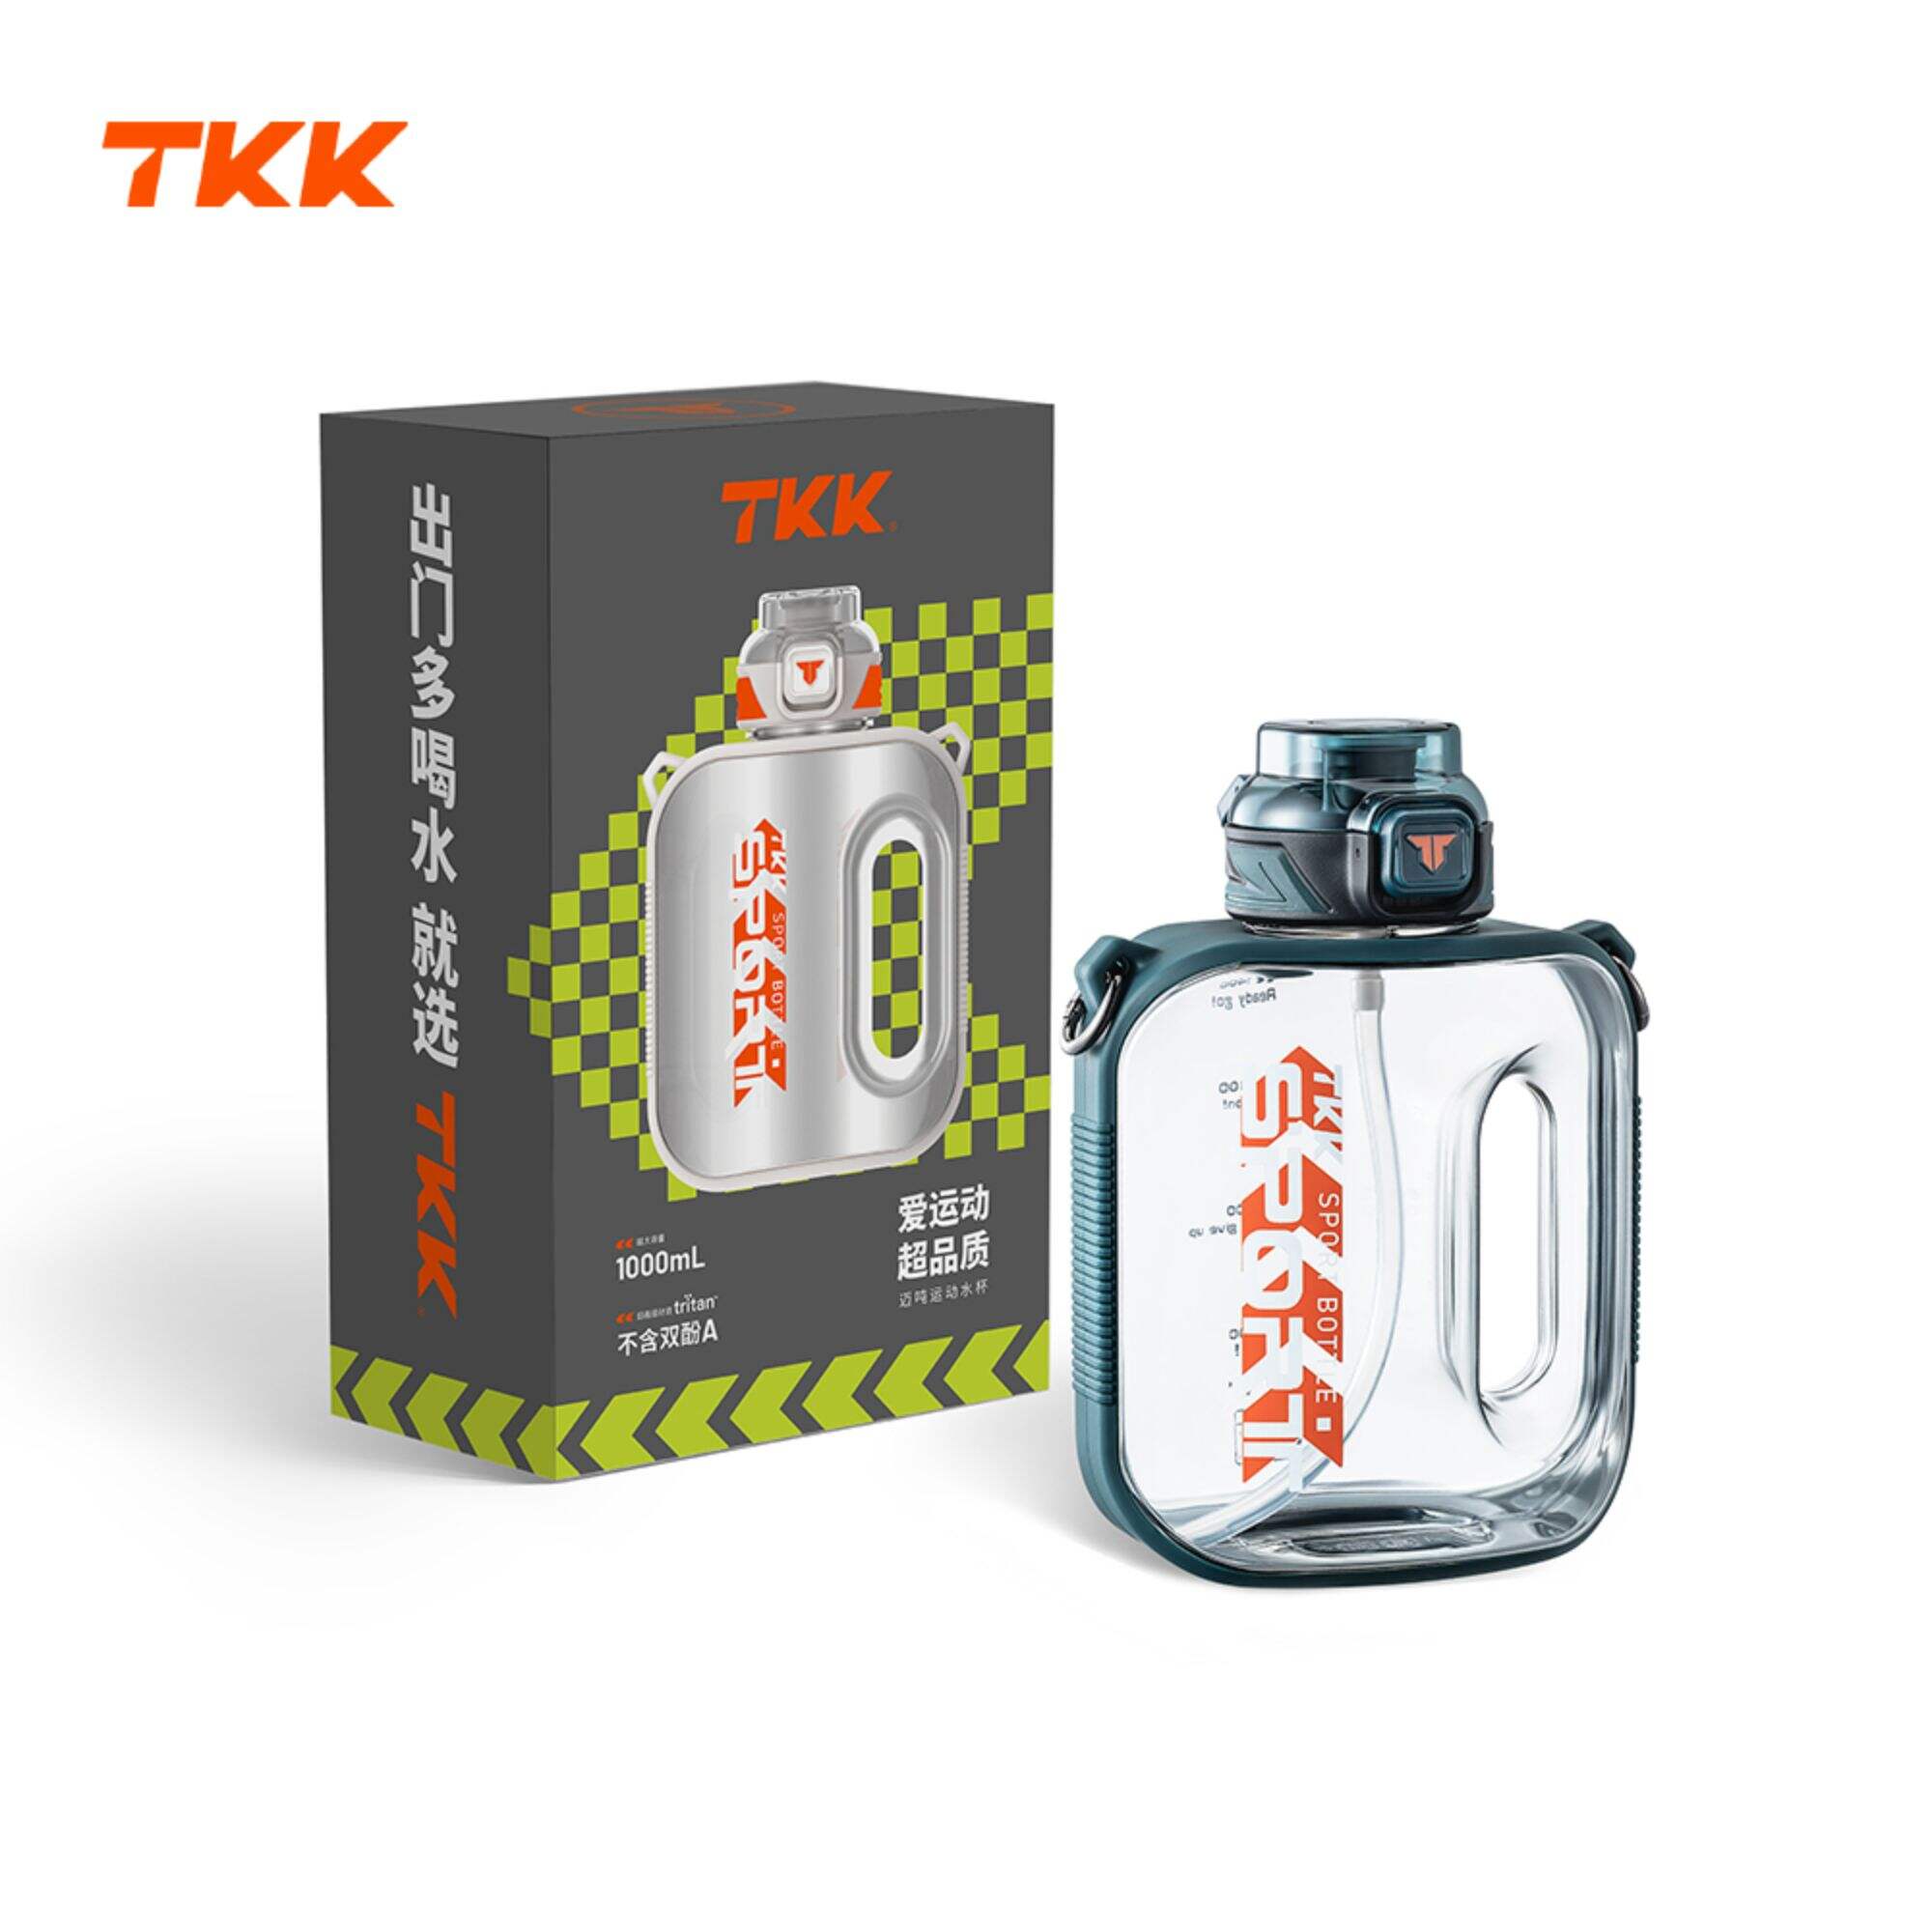 TKK 1000ml/1600ml/2000ml Large Capacity Plastic Water Bottle Jug with Straw Dishwasher Safe BPA Free Tritan for Gym Yoga Travel Camping Outdoor